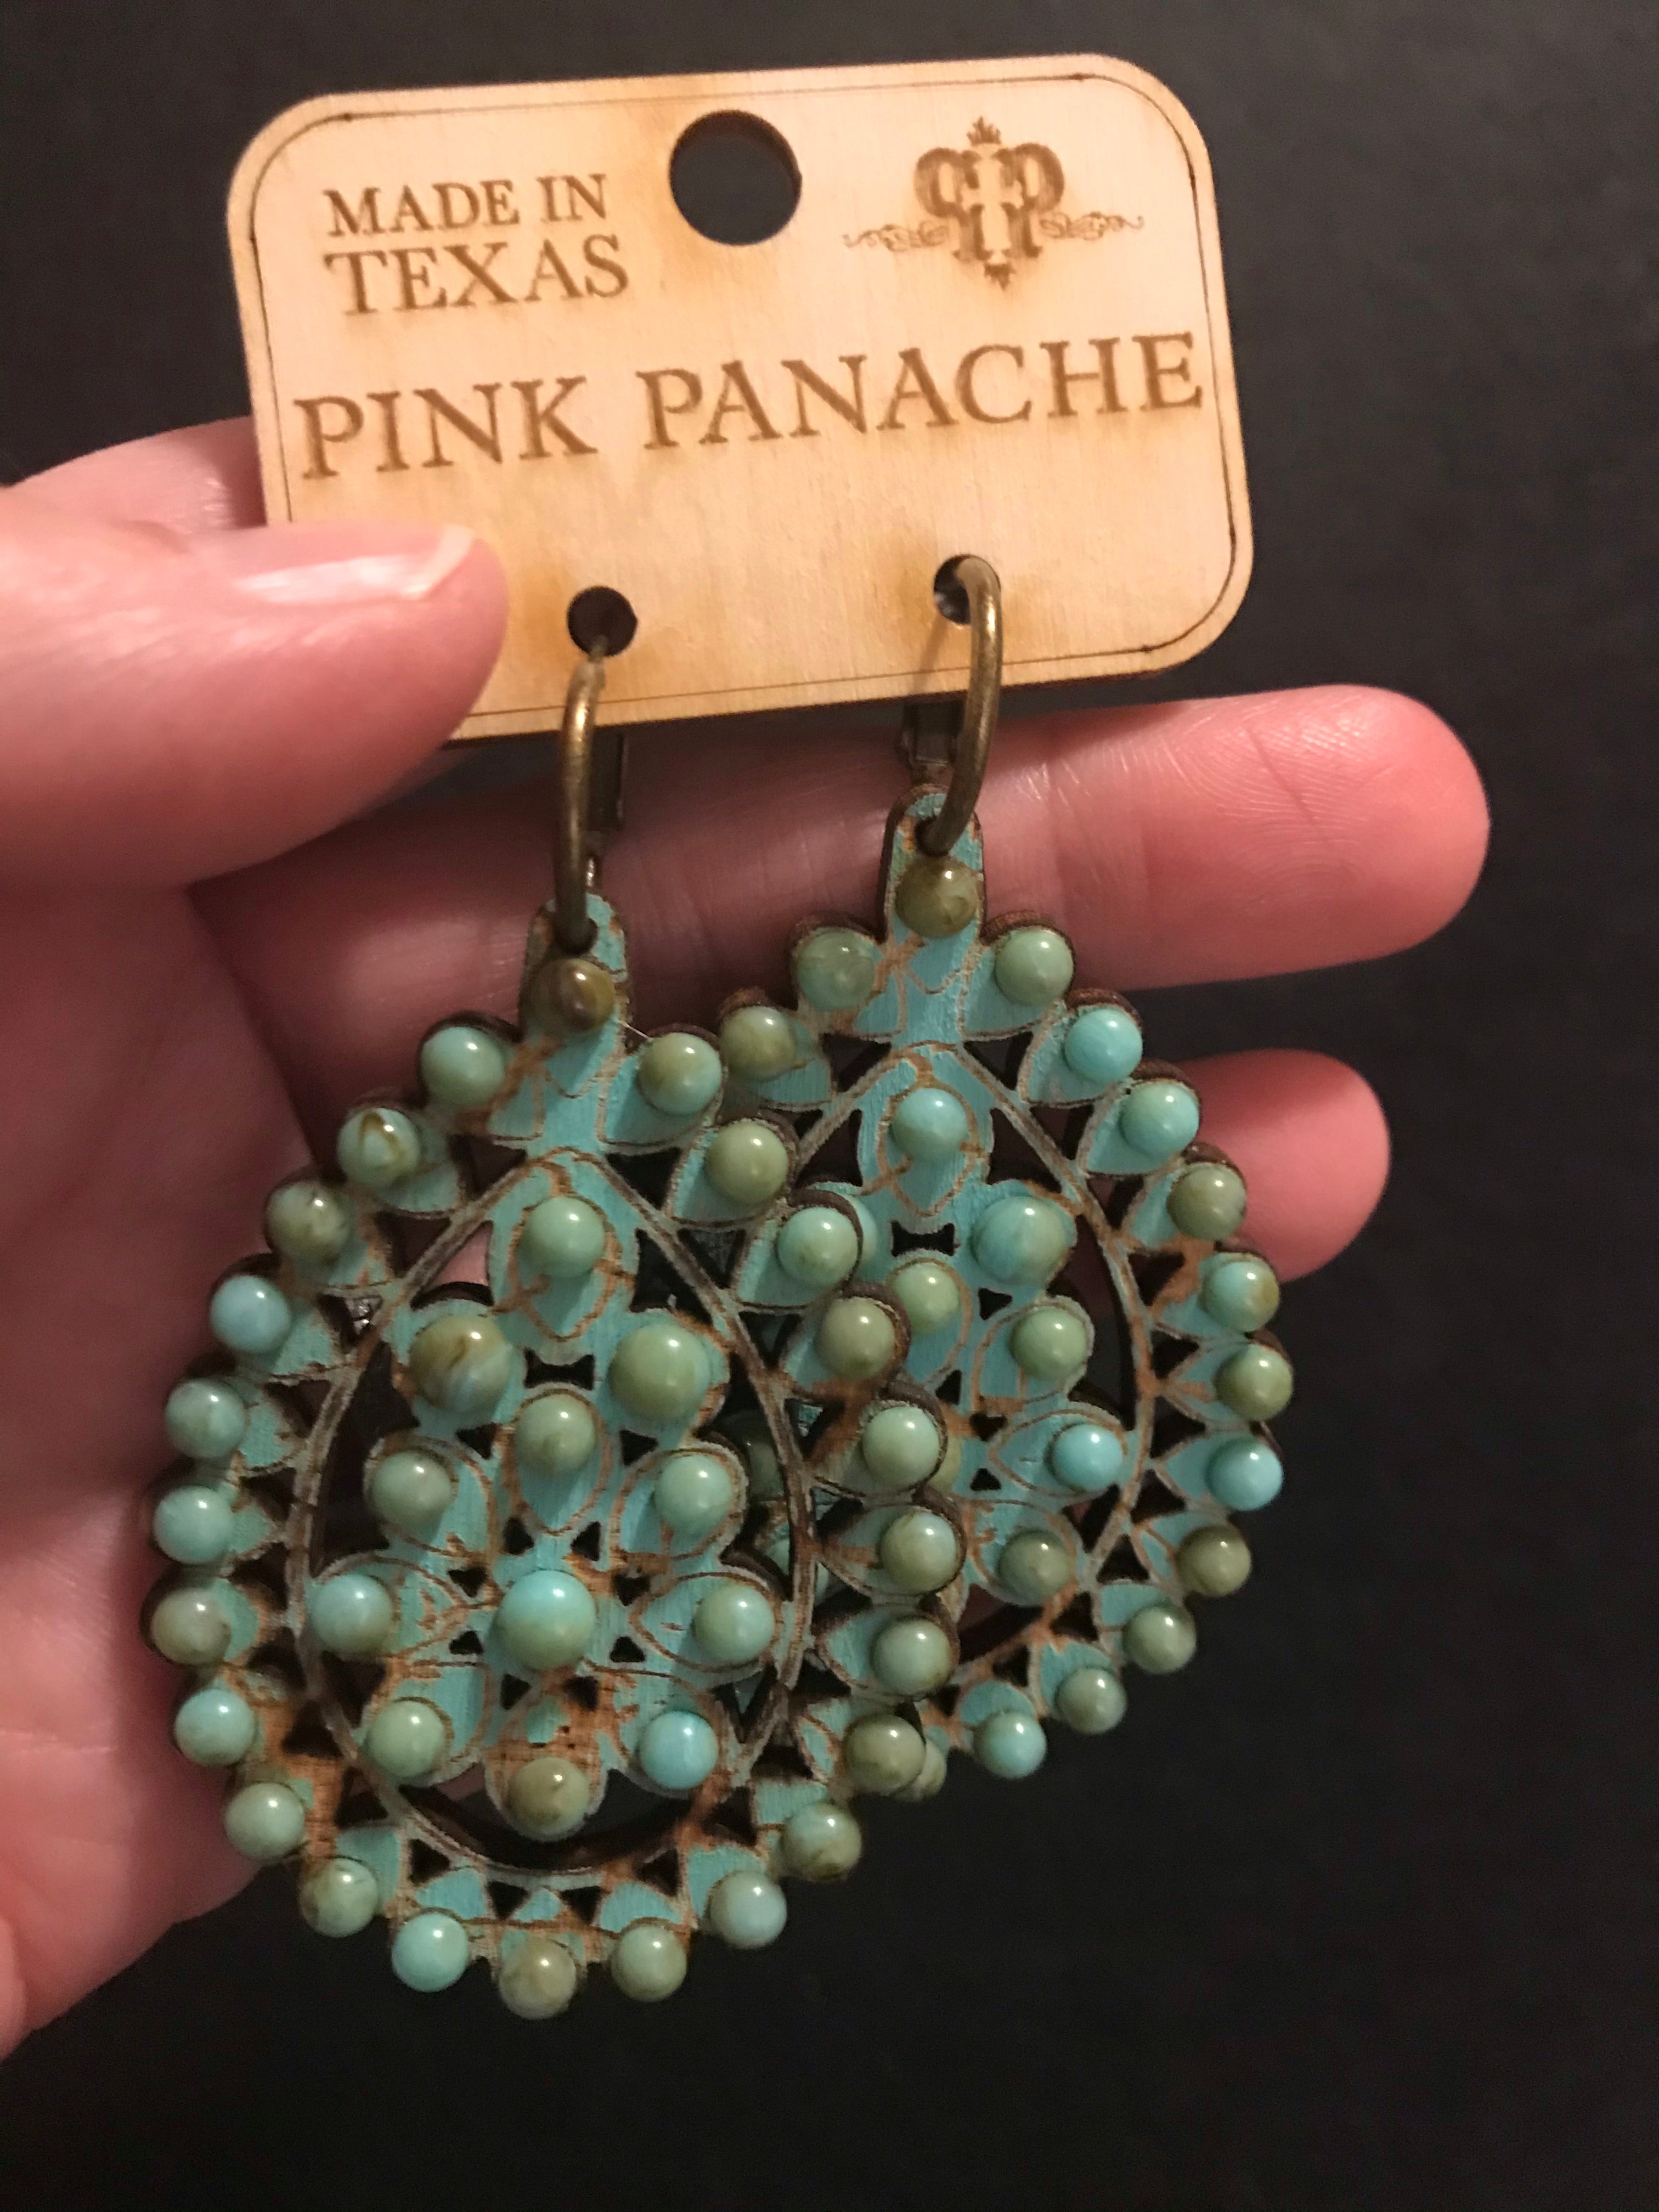 Santa Fe Turquoise Pink Panache Earrings